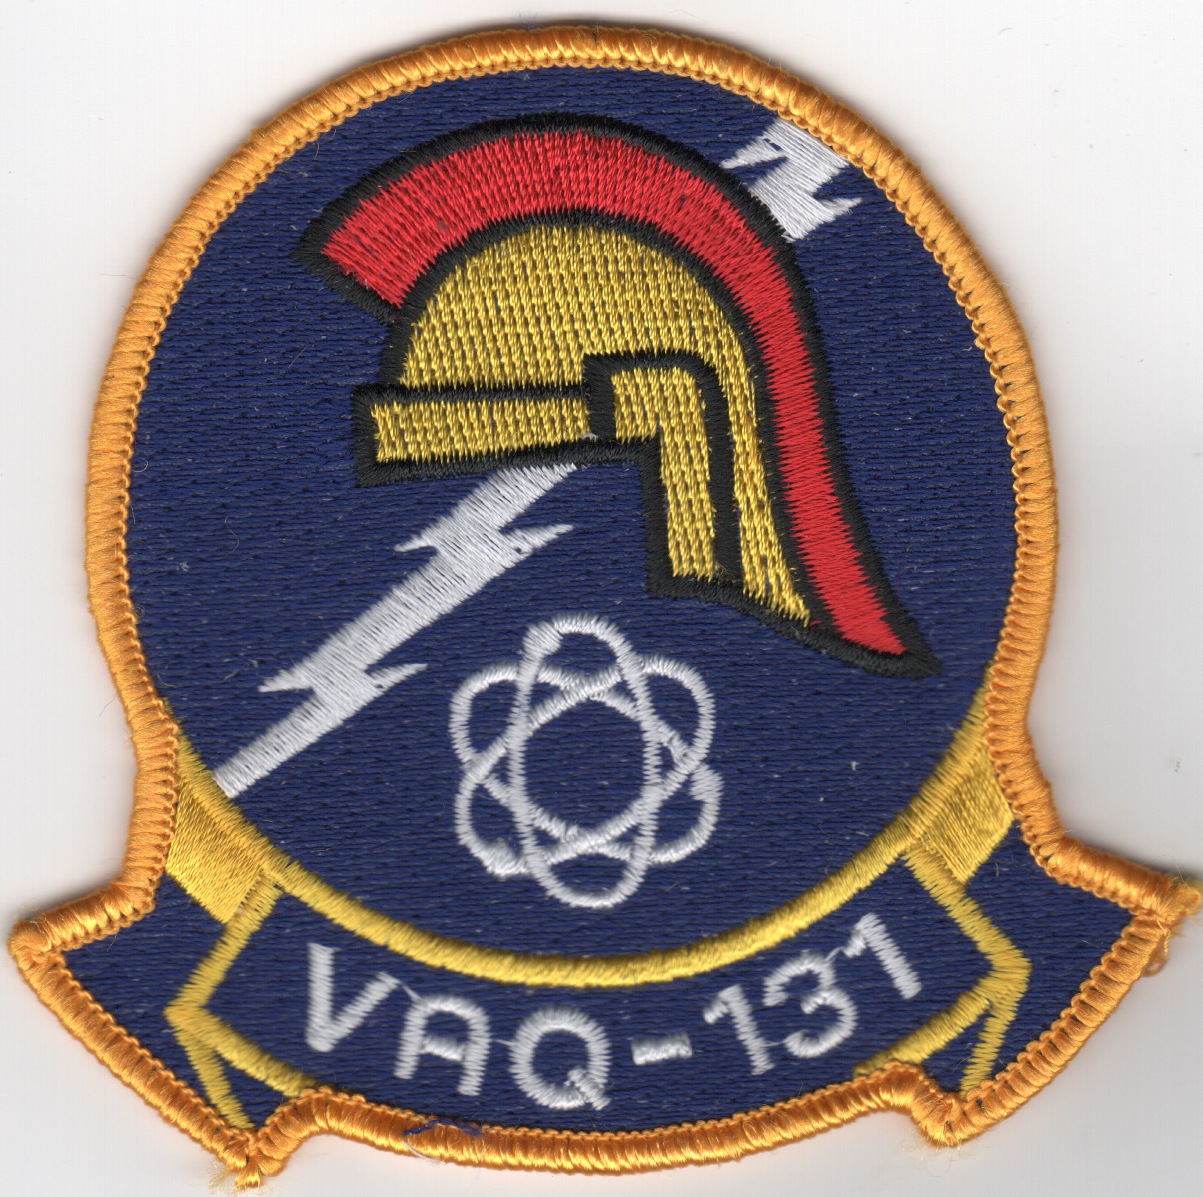 VAQ-131 Squadron Patch (Dk Blue/Yellow Border)